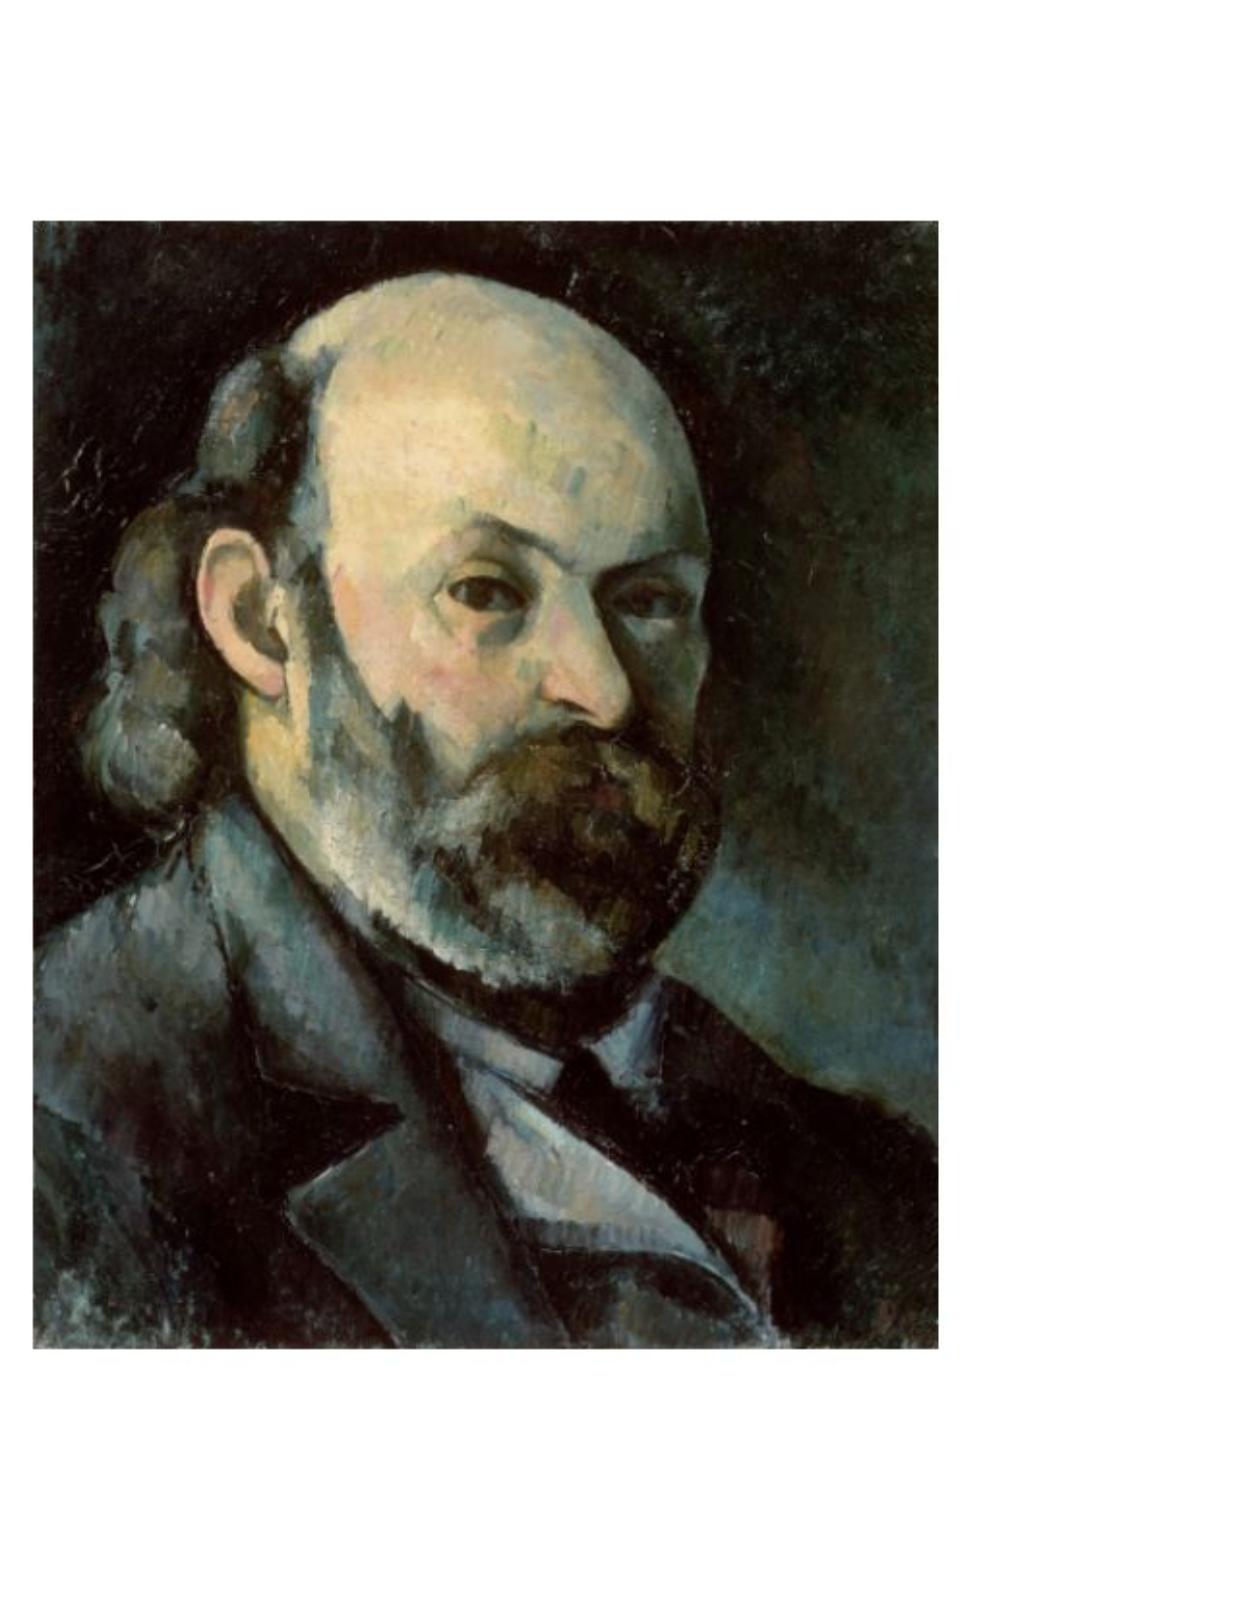 Album de arta Cezanne